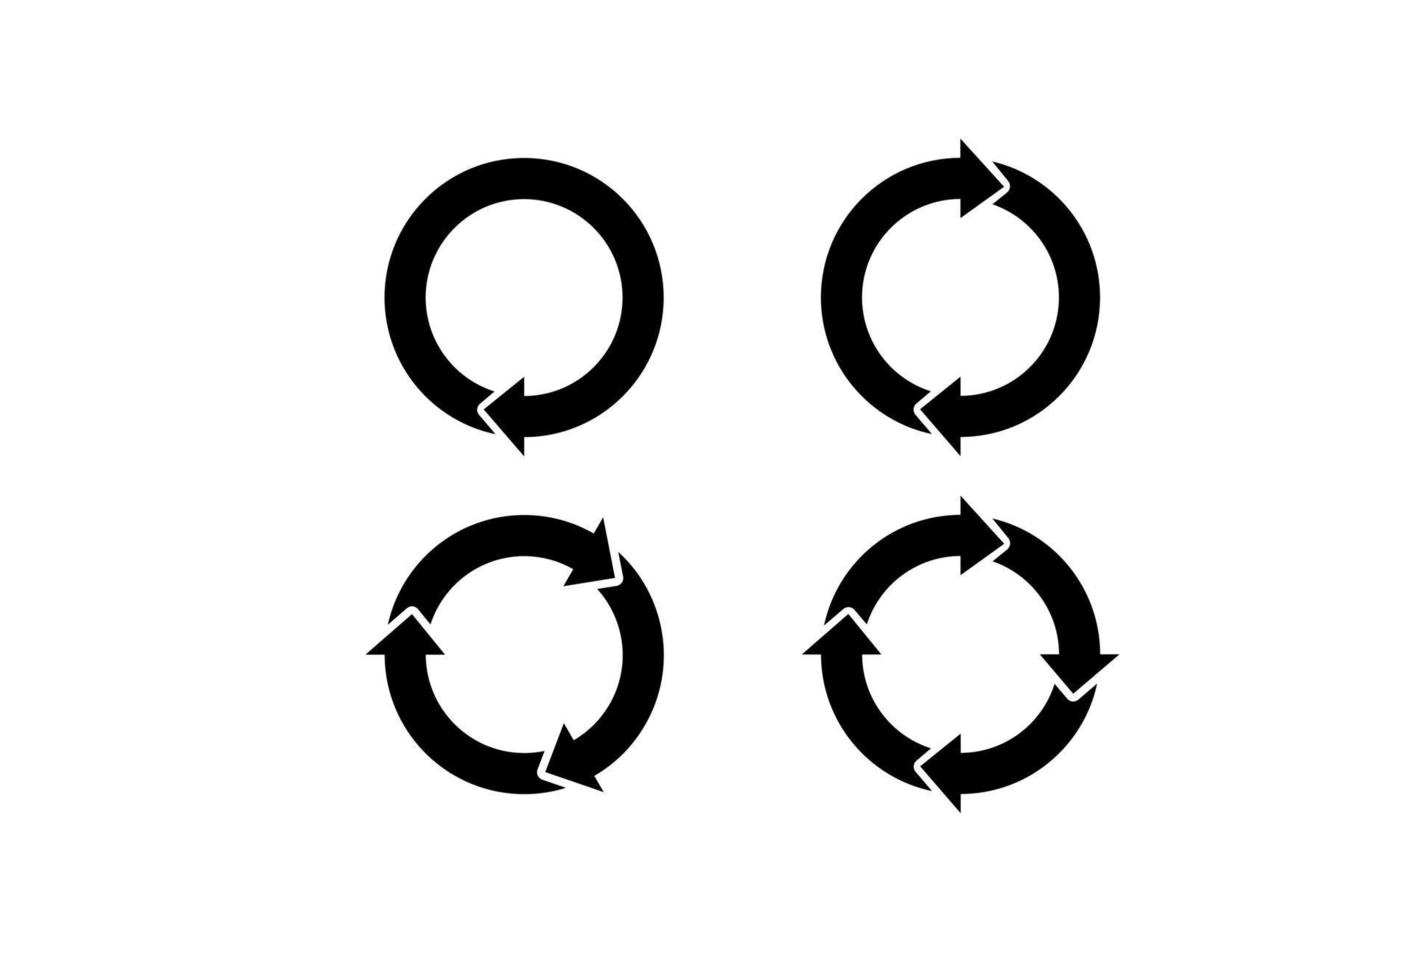 signo de flecha recargar actualización rotación bucle pictograma conjunto de iconos aislado sobre fondo blanco vector